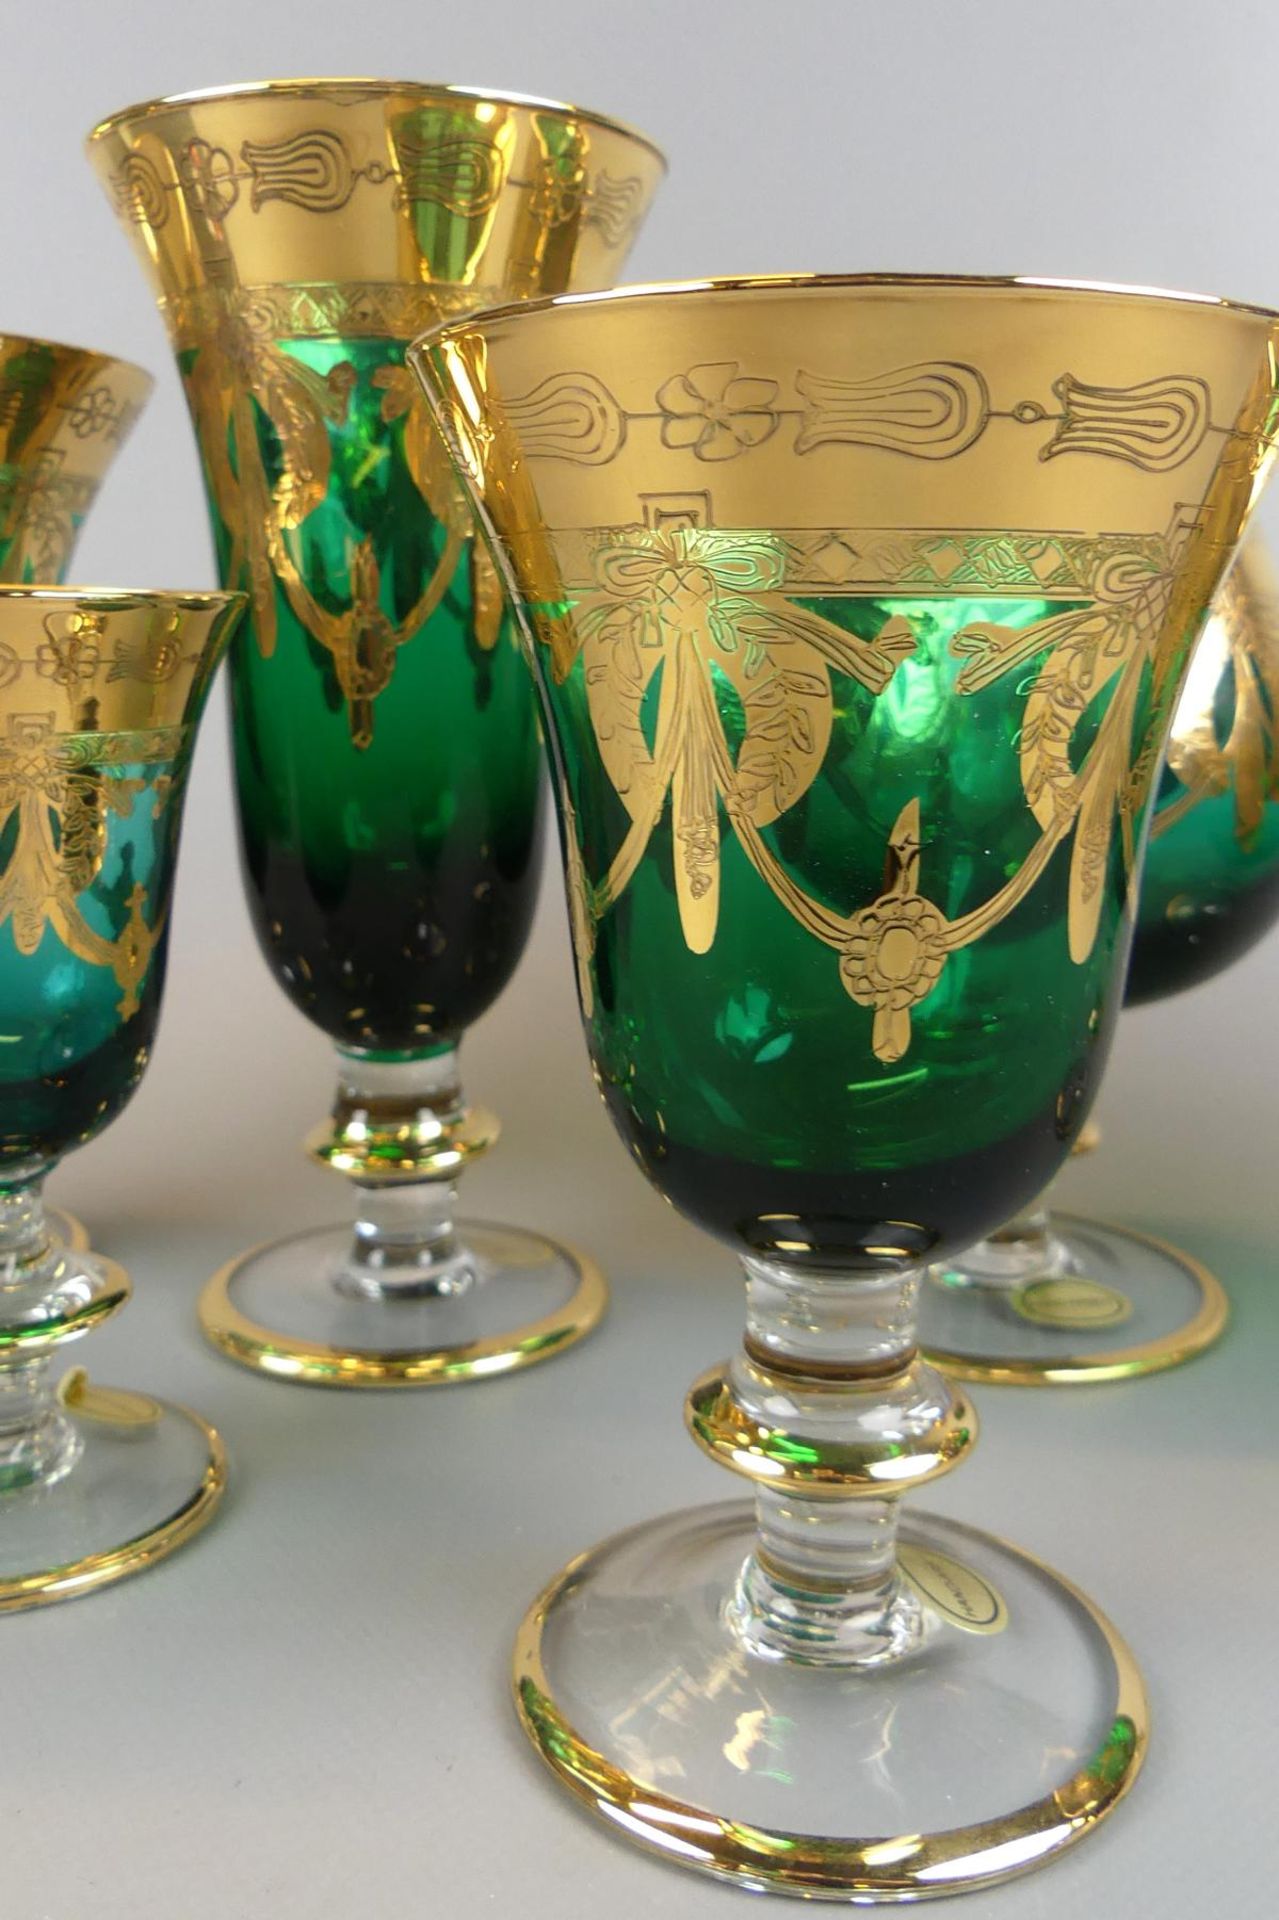 6 Gläser, versch. Formen, grünes Glas mit Goldbemalung, Made in Italy - Image 2 of 2